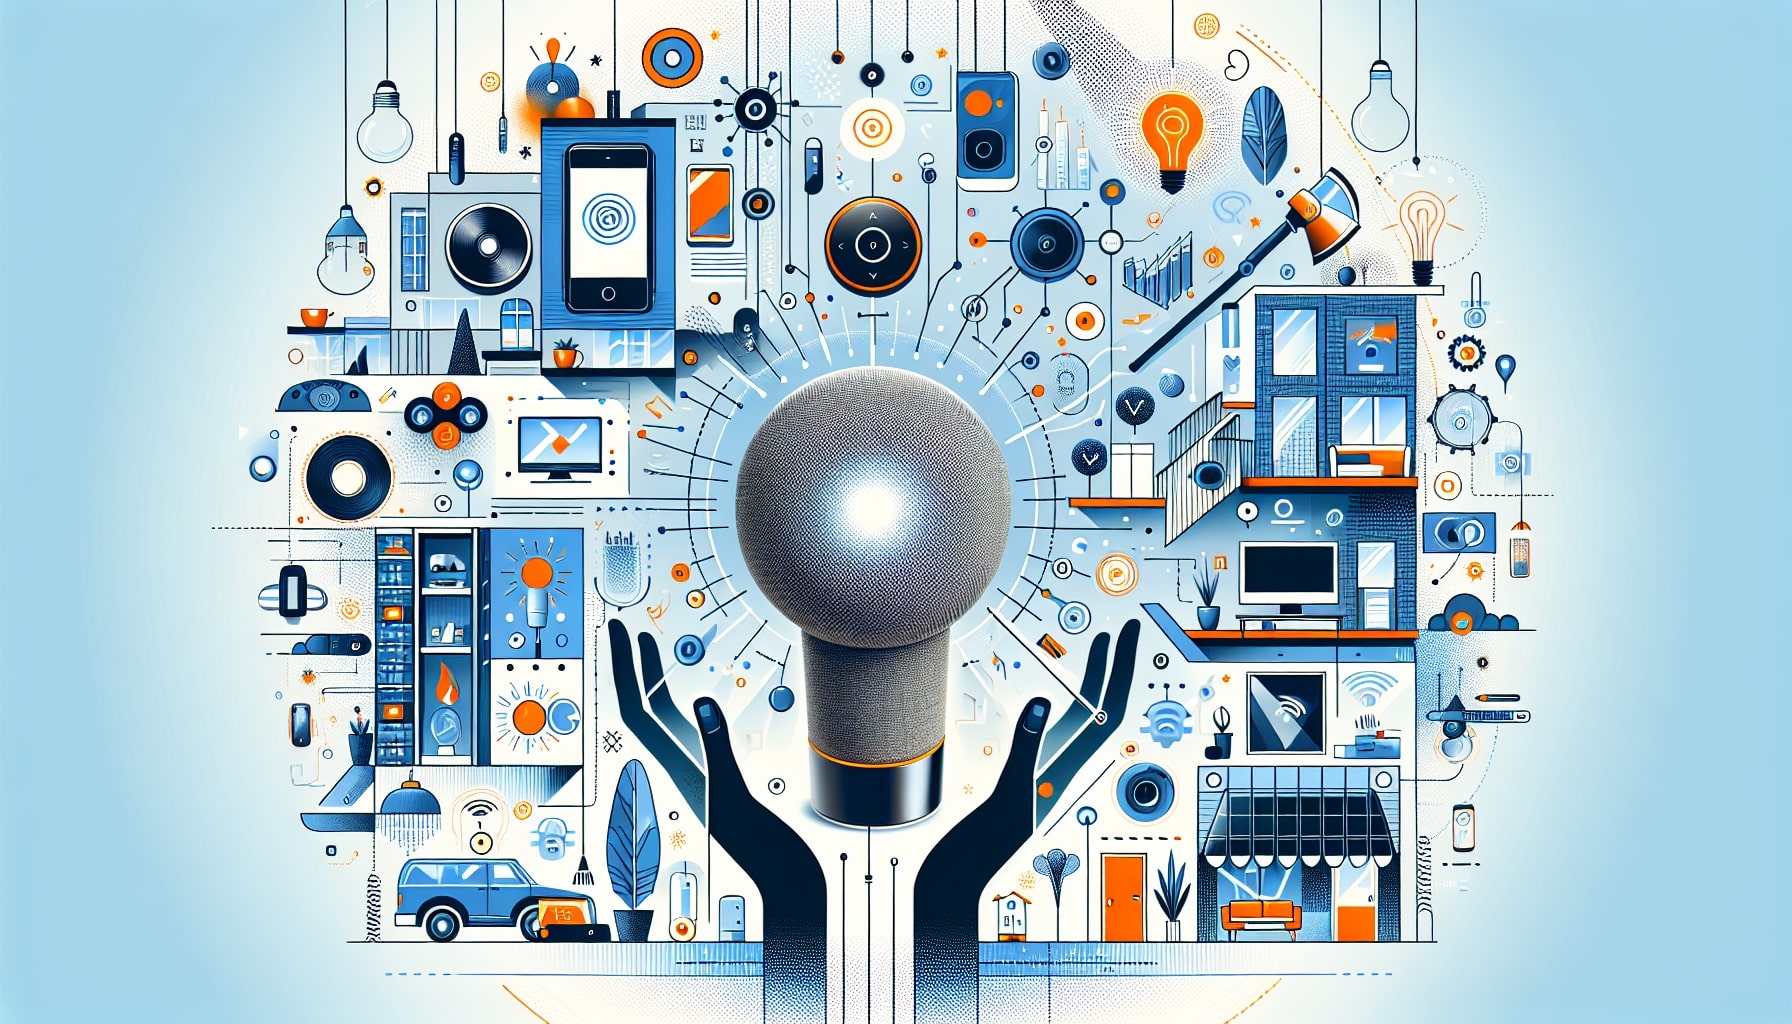 Illustration of smart home technology ecosystem.